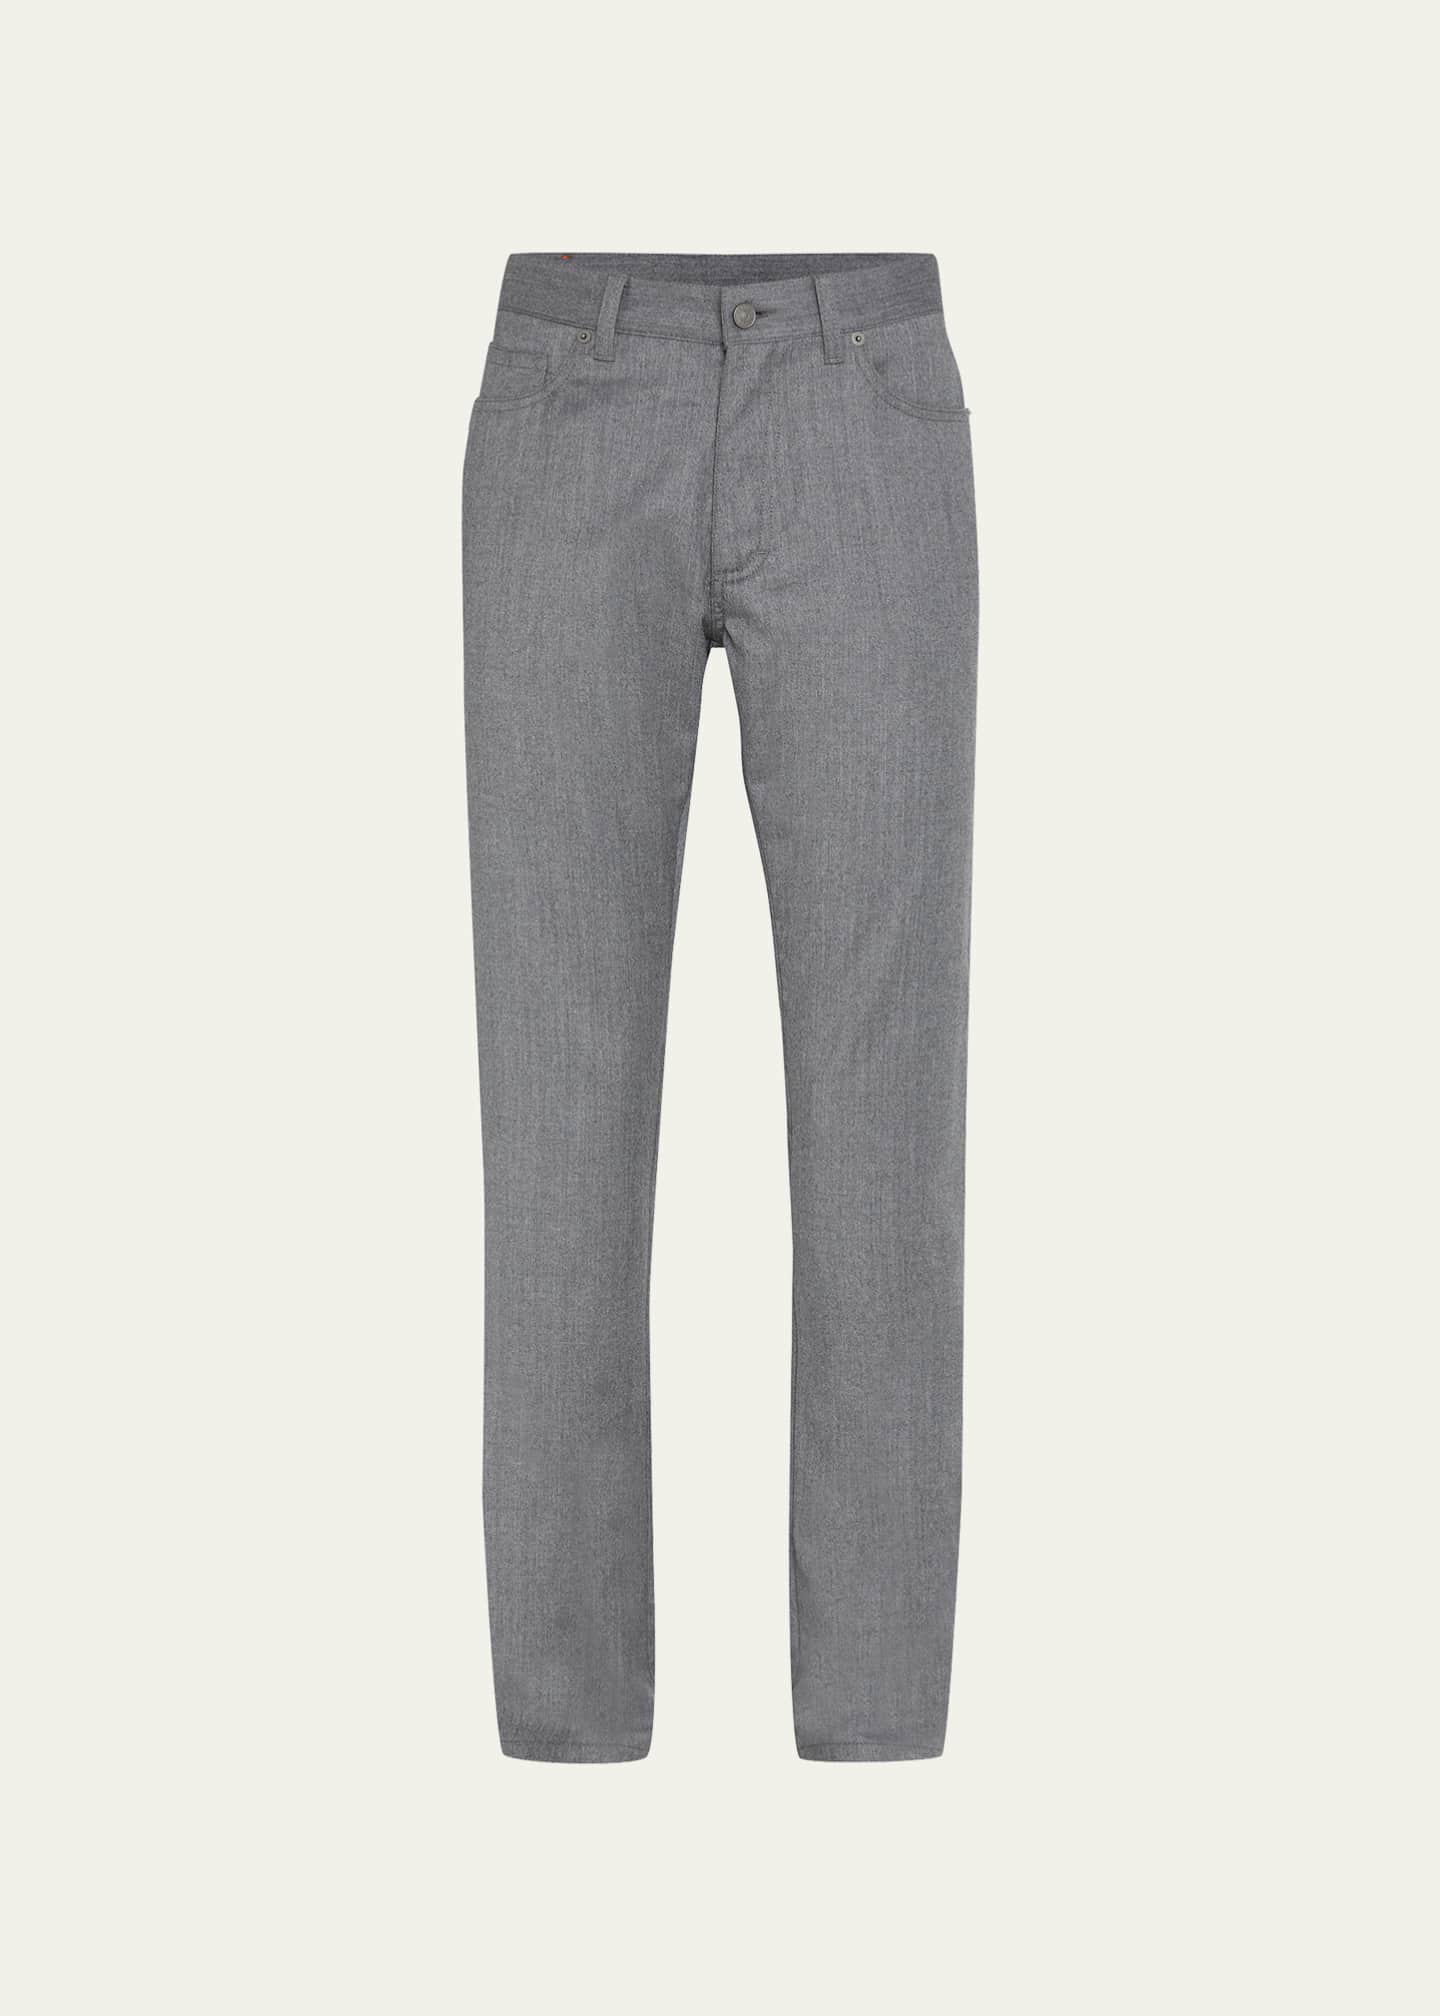 ZEGNA Men's Wool 5-Pocket Pants